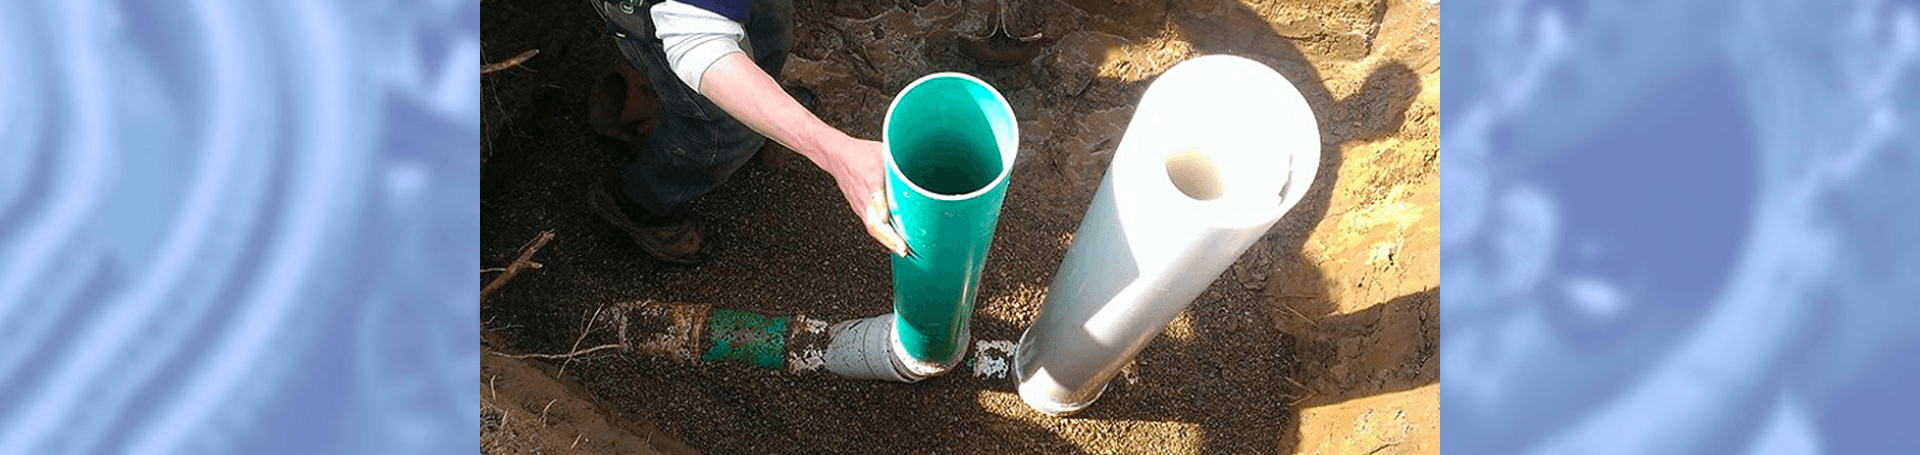 ASAP American Sewer And Plumbing work